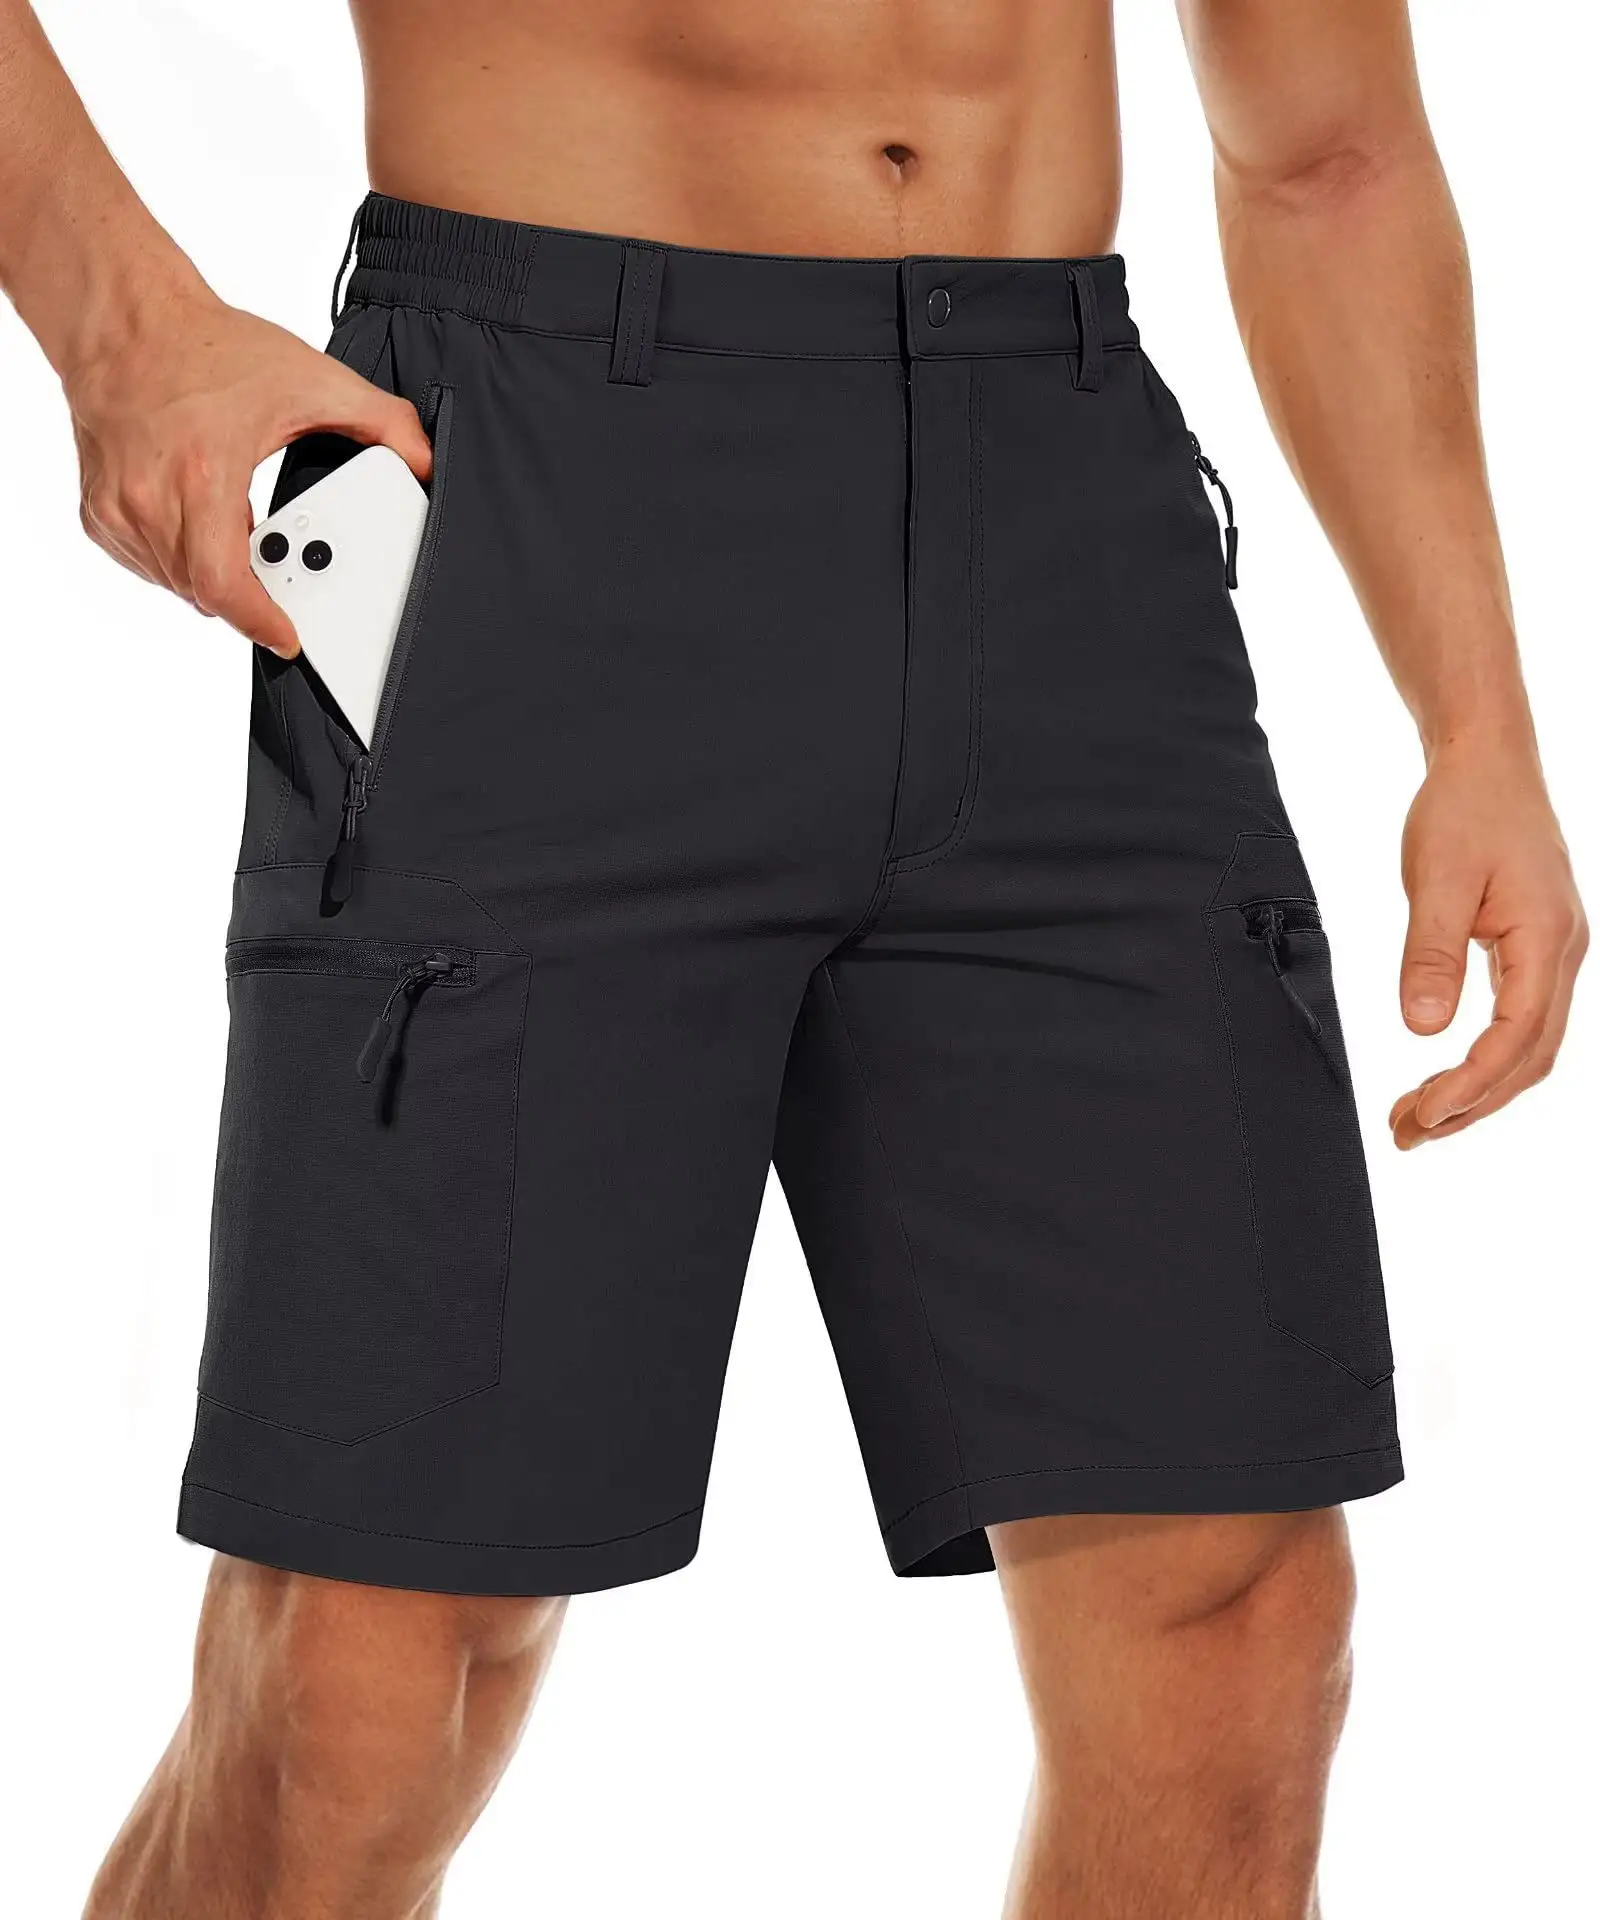 Shorts de carga masculino, bermuda casual de caminhada ao ar livre, esportiva, com bolsos, de corrida, para carga ativa